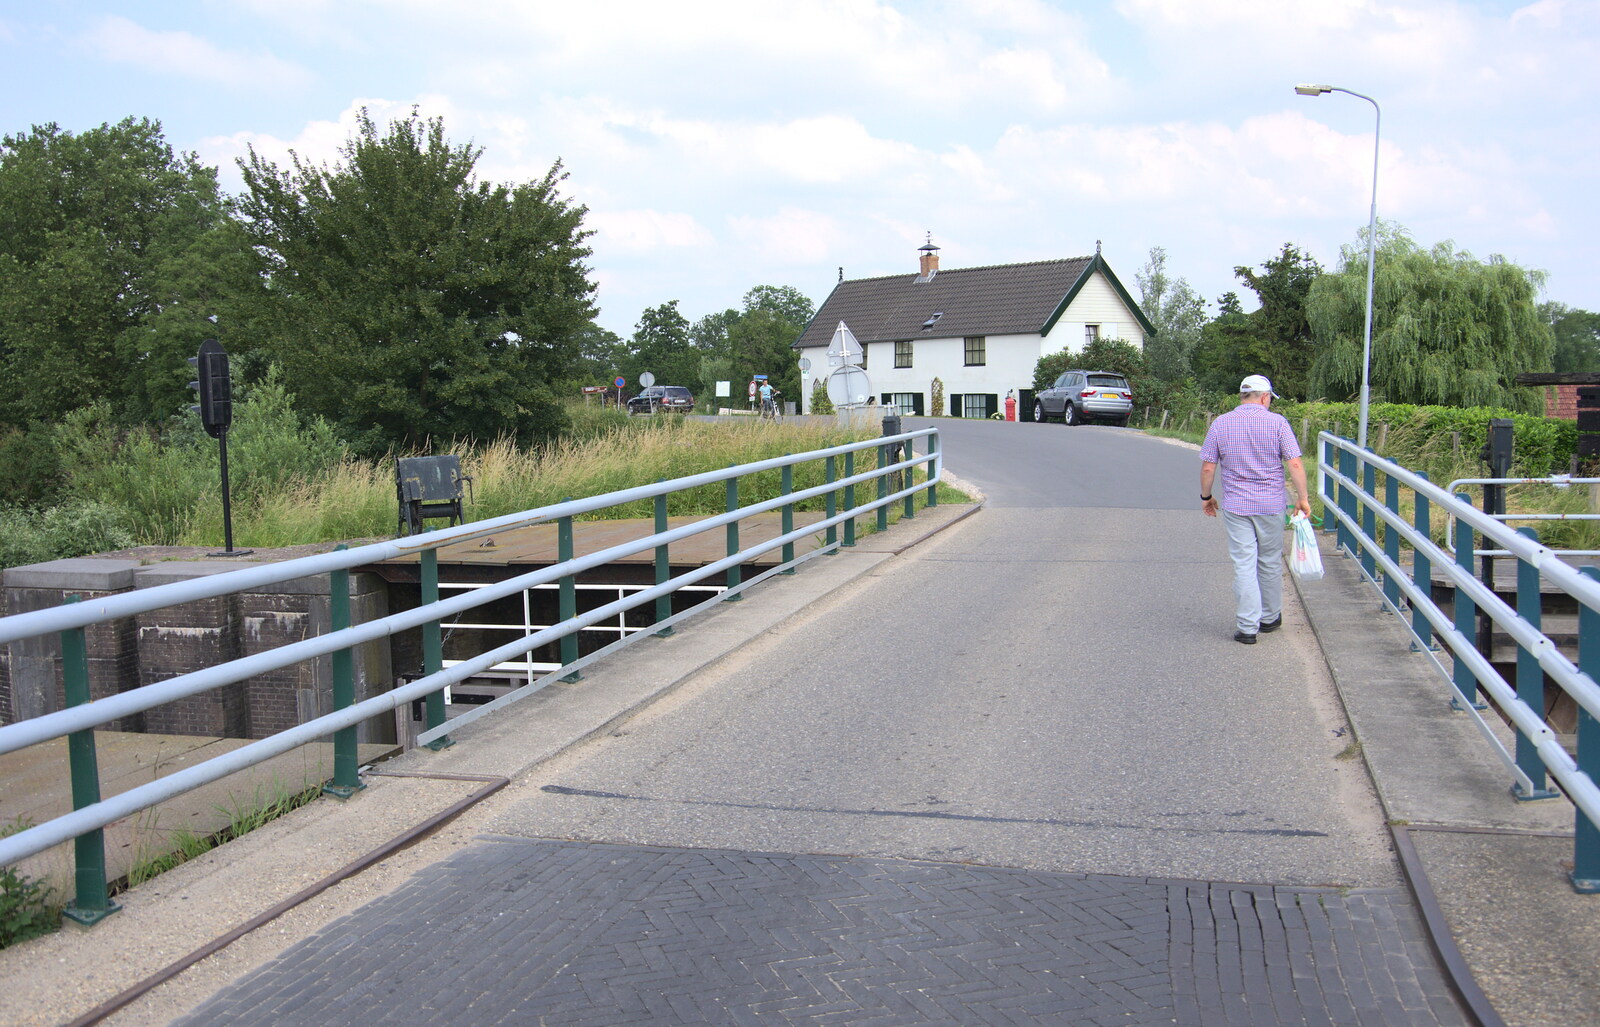 Hamish walks over the bridge from A Postcard From Asperen, Gelderland, Netherlands - 9th June 2018